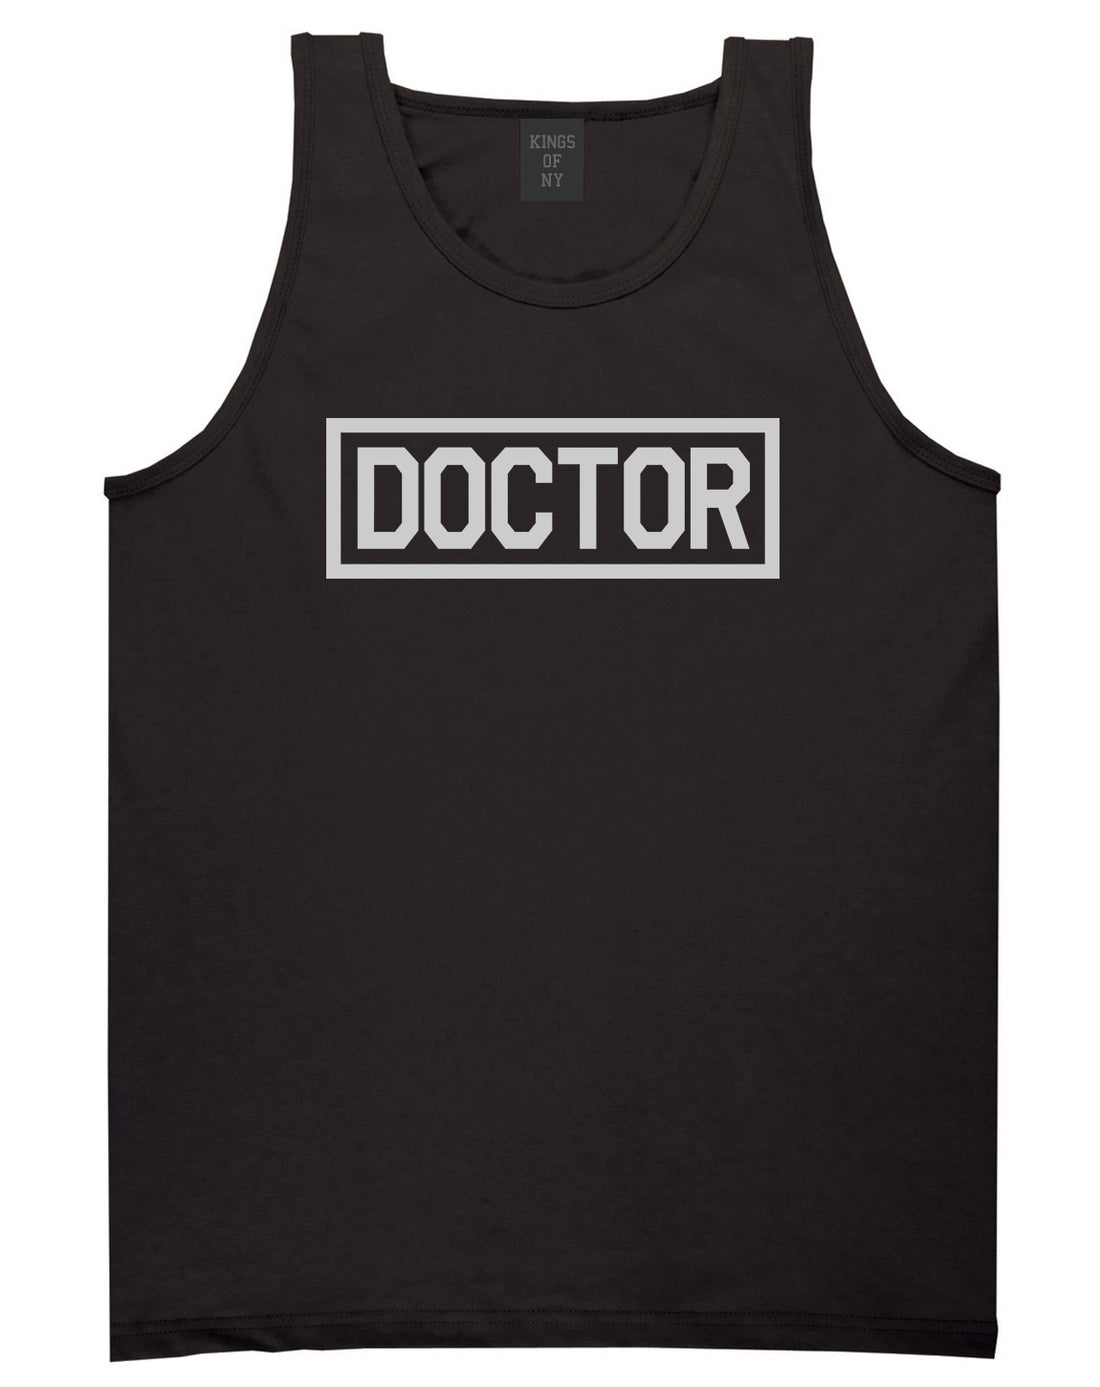 Doctor_Box_Logo Mens Black Tank Top Shirt by Kings Of NY